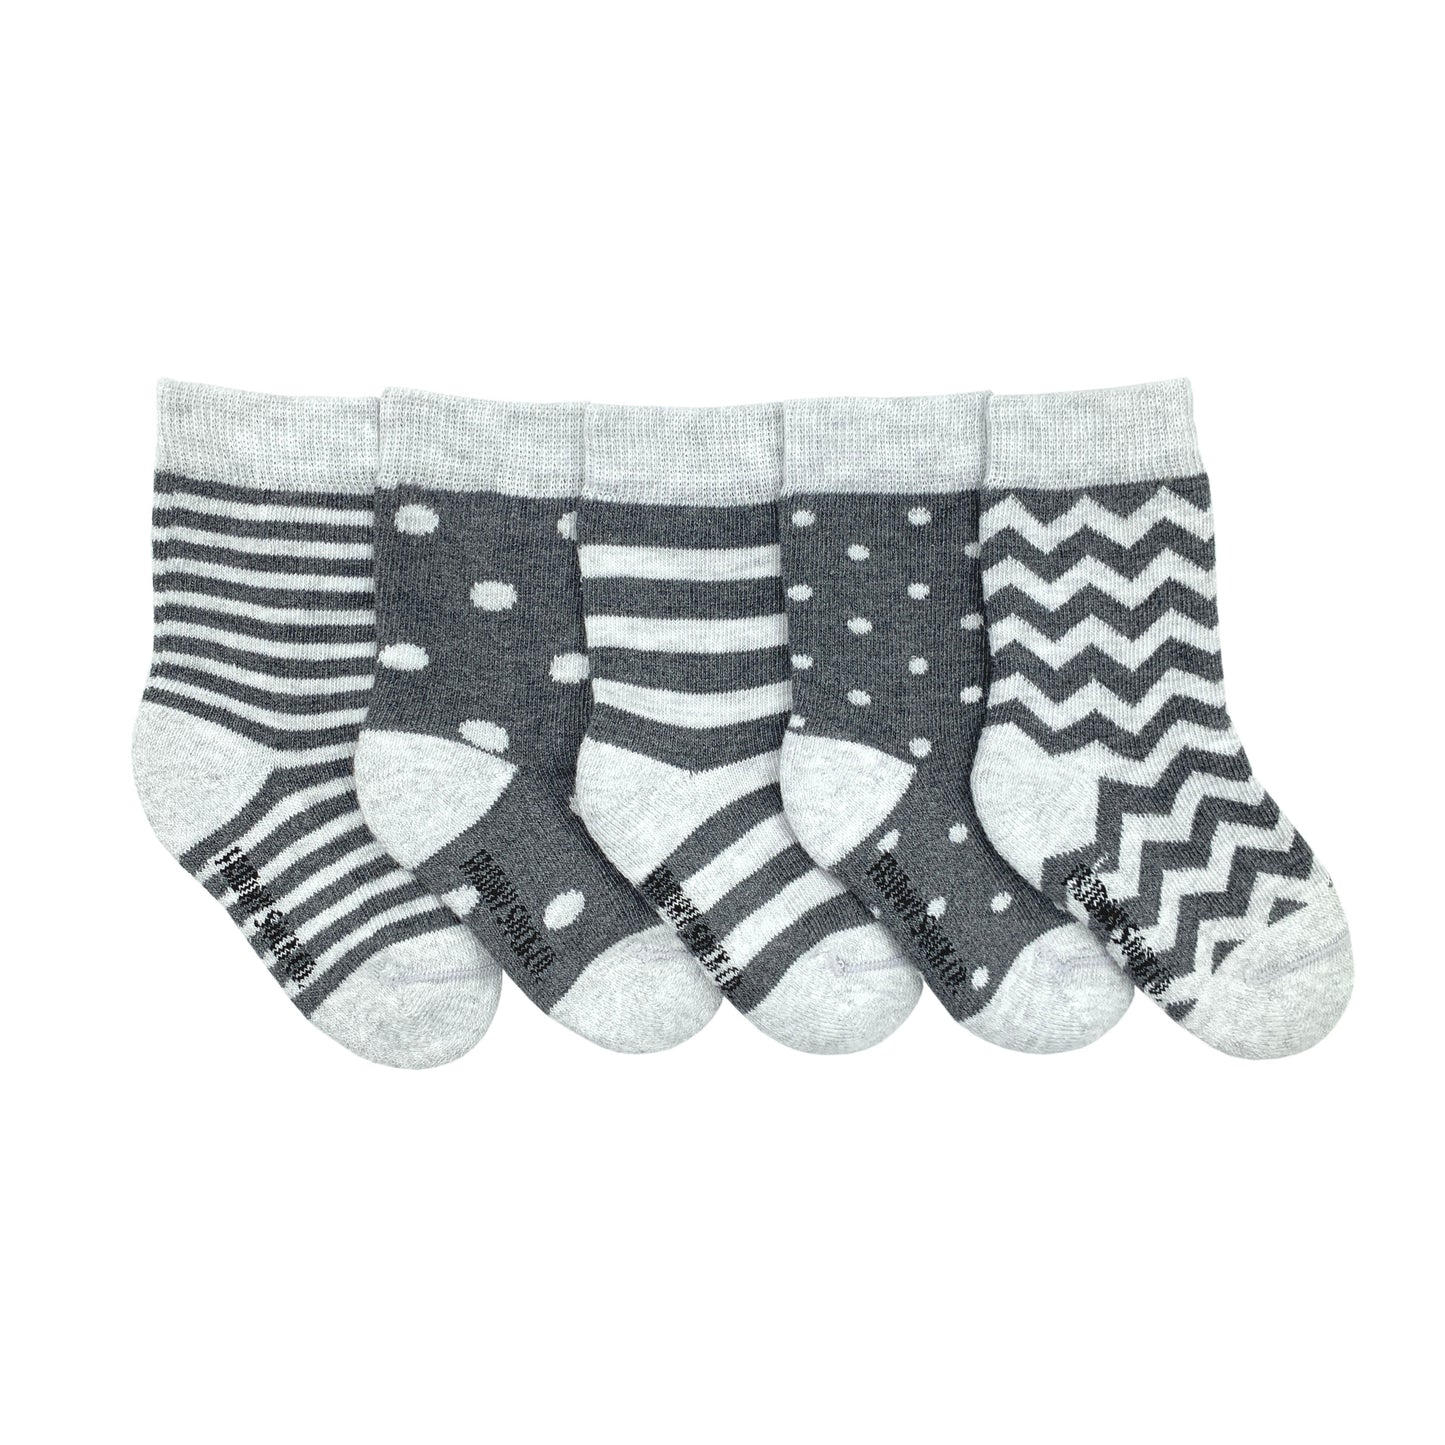 Mismatched Baby Sock Sets for Babies